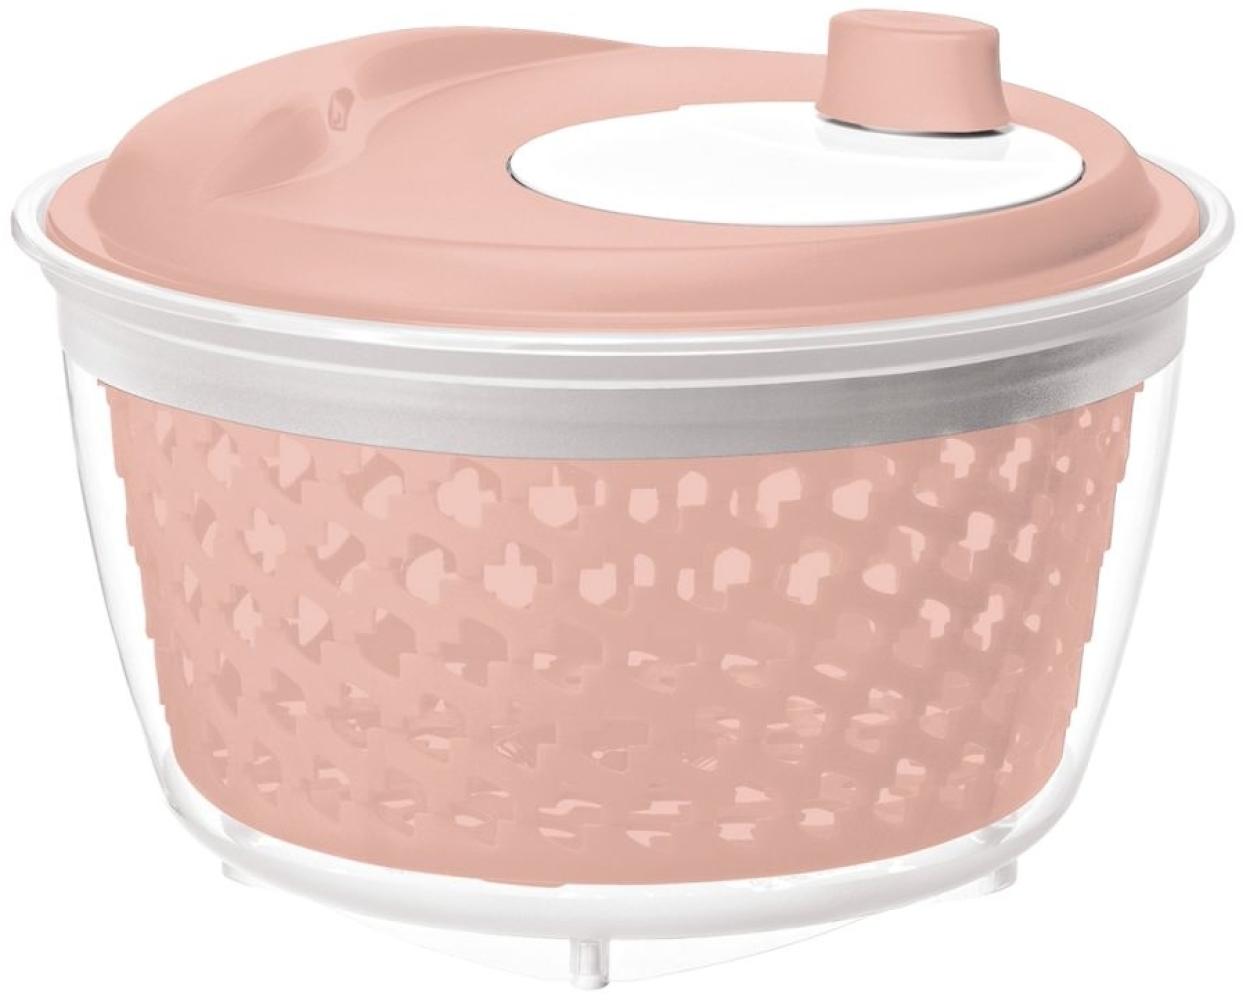 Rotho Fresh Salatschleuder, Kunststoff (PP) BPA-frei, pink, 4. 5l (25. 0 x 25. 0 x 16. 5 cm) Bild 1